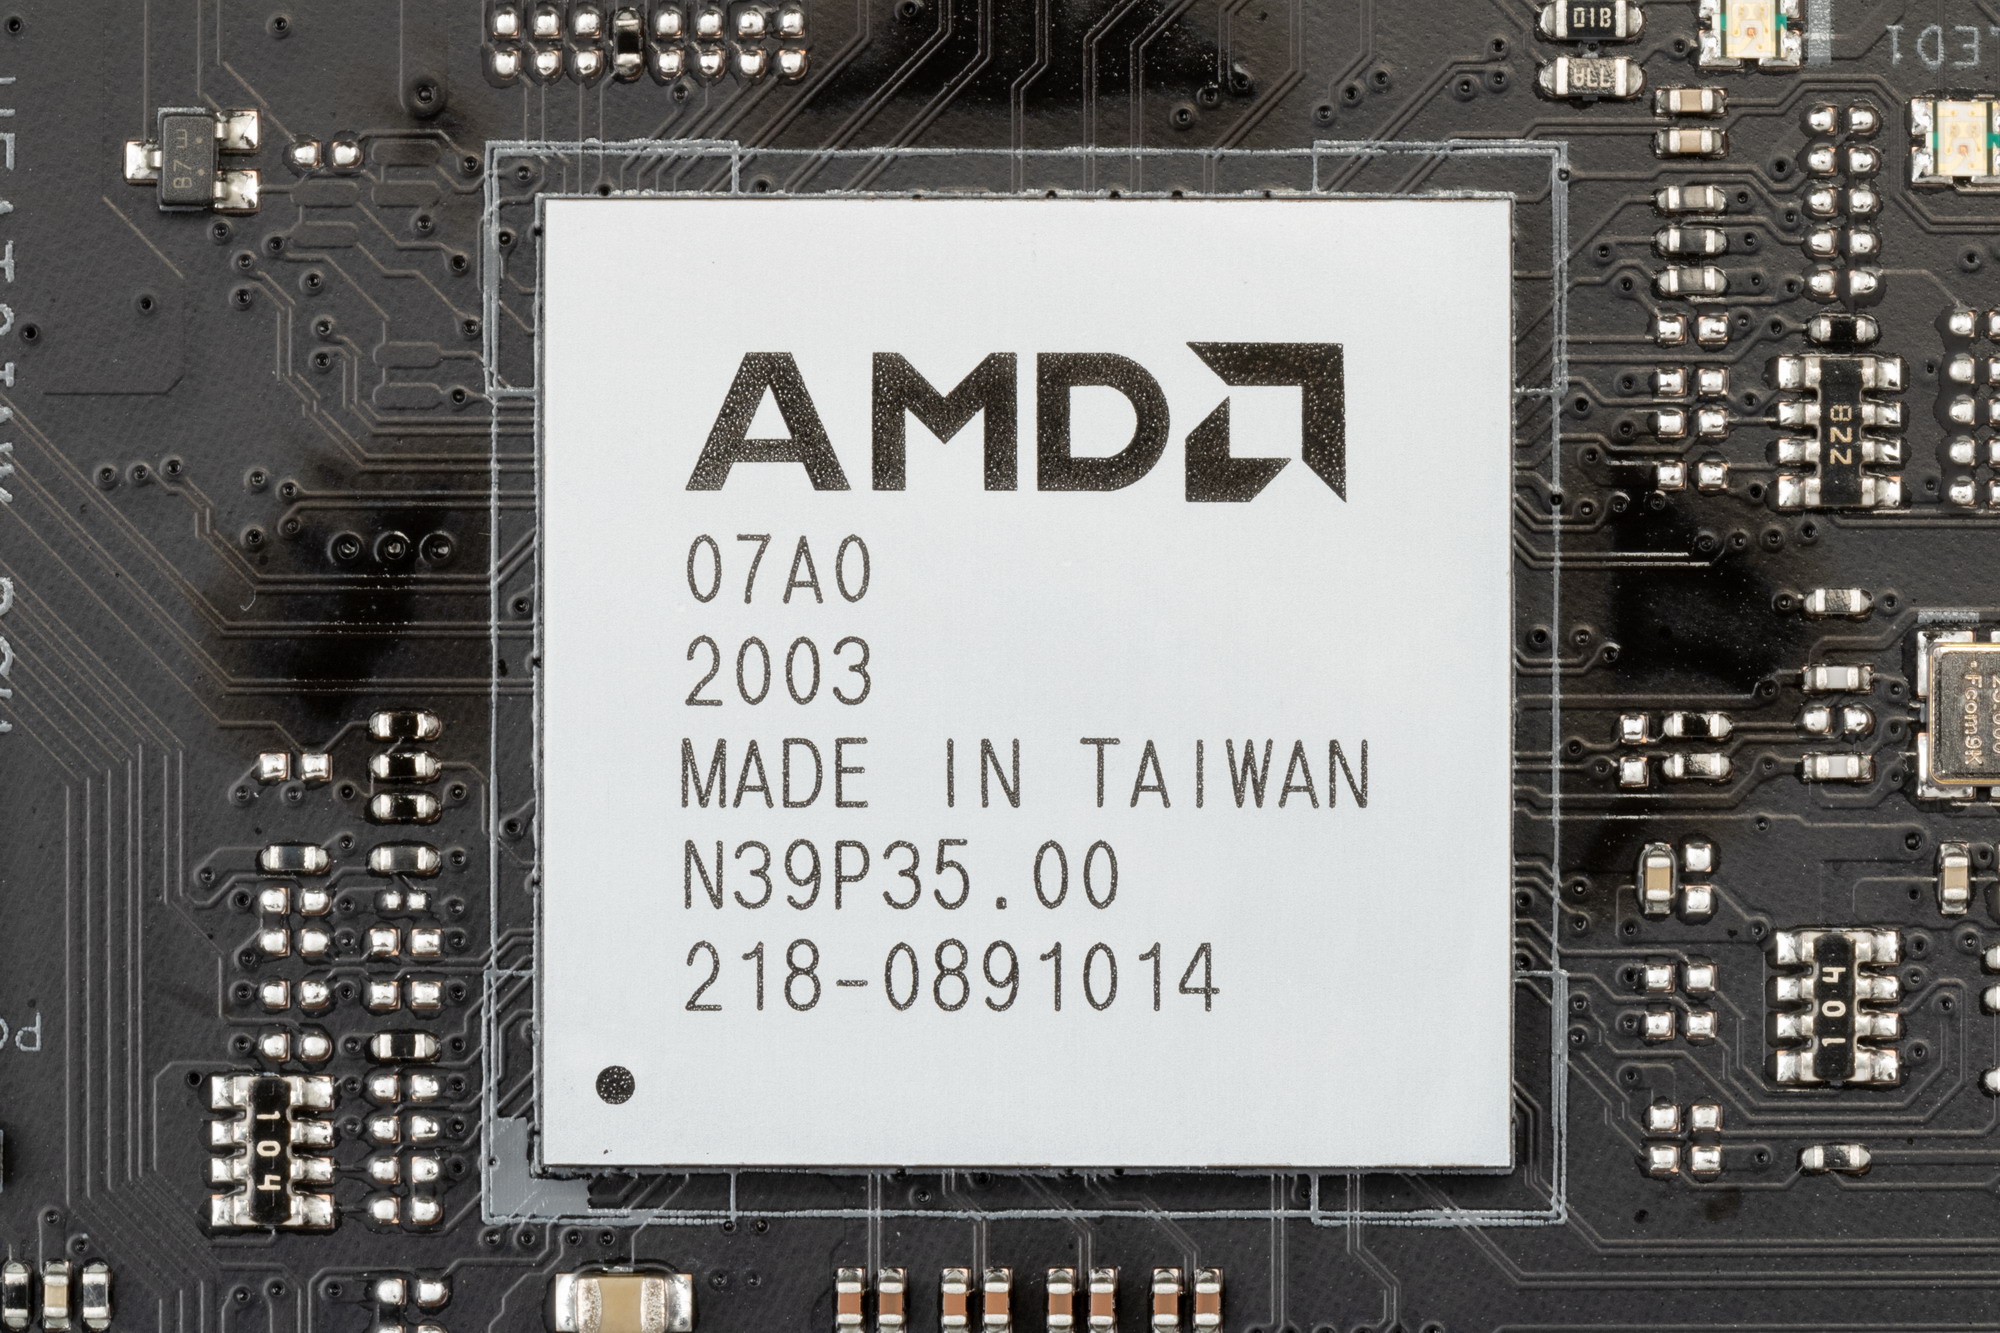 Amd b550 процессоры. B550m чипсет. AMD b550 чипсет. Am4 чипсет AMD b550a. AMD - x570, b550, x470, b450, x370, b350 и a320.